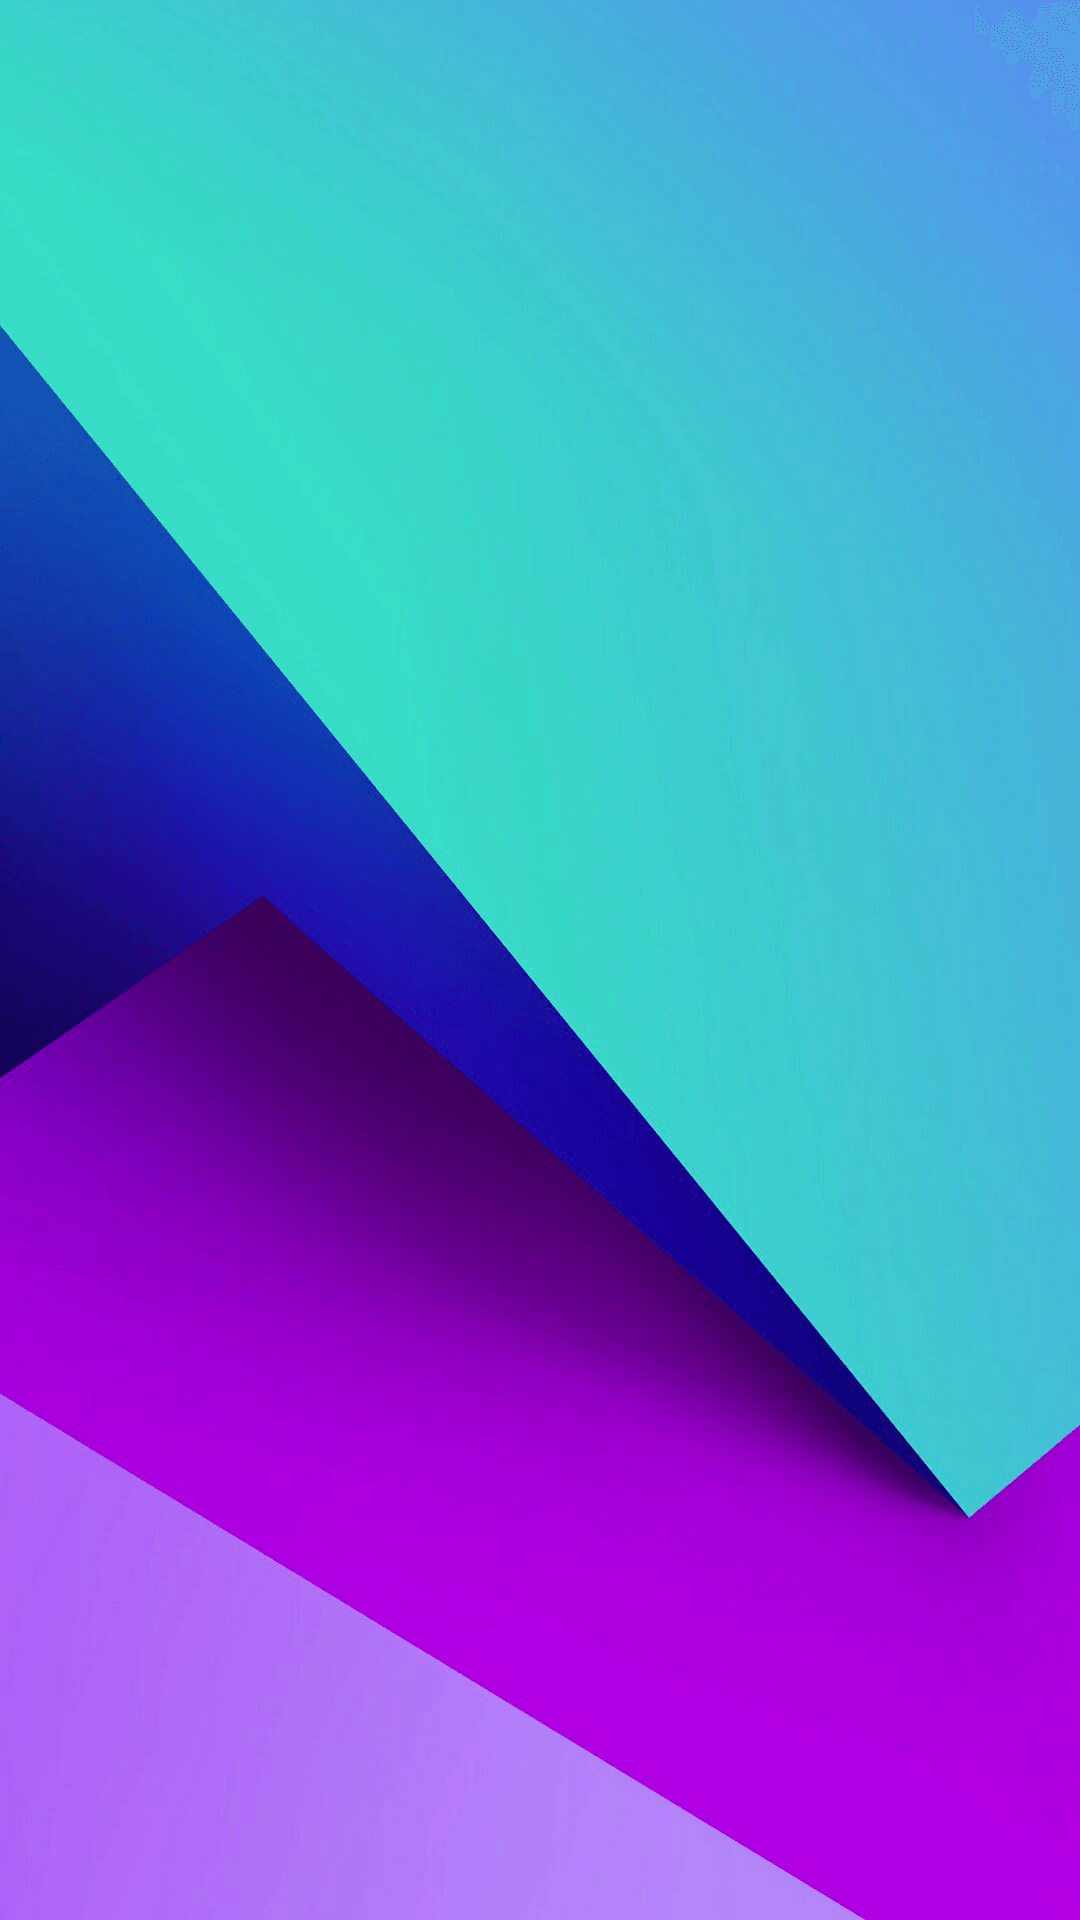 samsung wallpaper hd,blau,lila,violett,türkis,linie